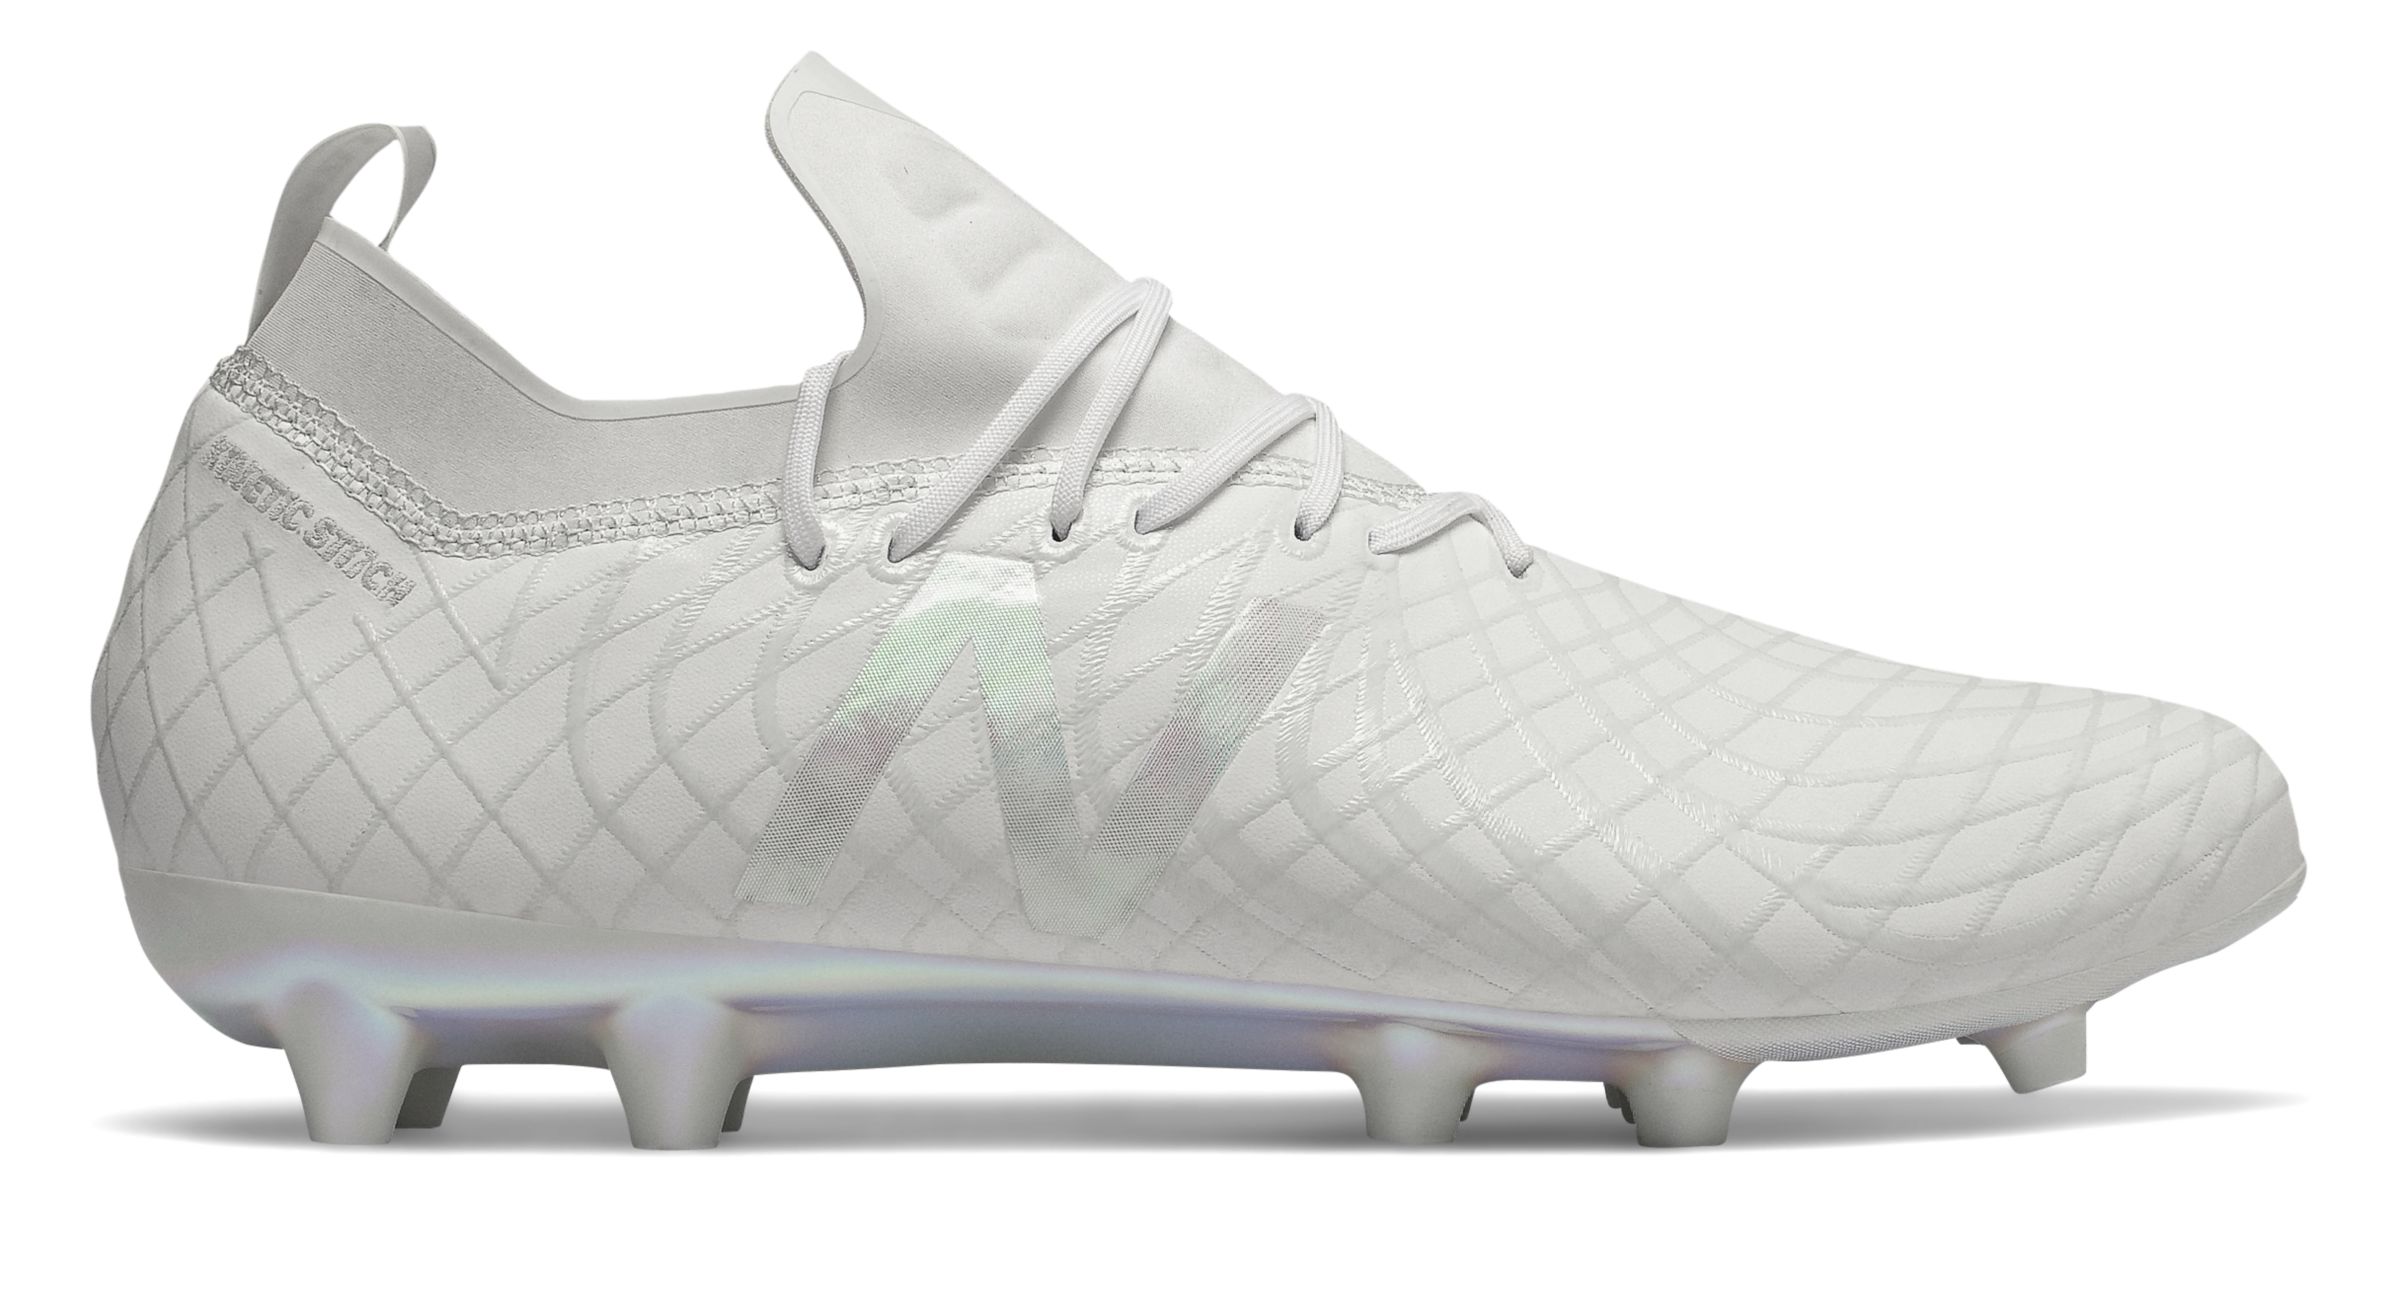 Men's Whiteout FG Football Shoes MSFCO-V1 - New Balance